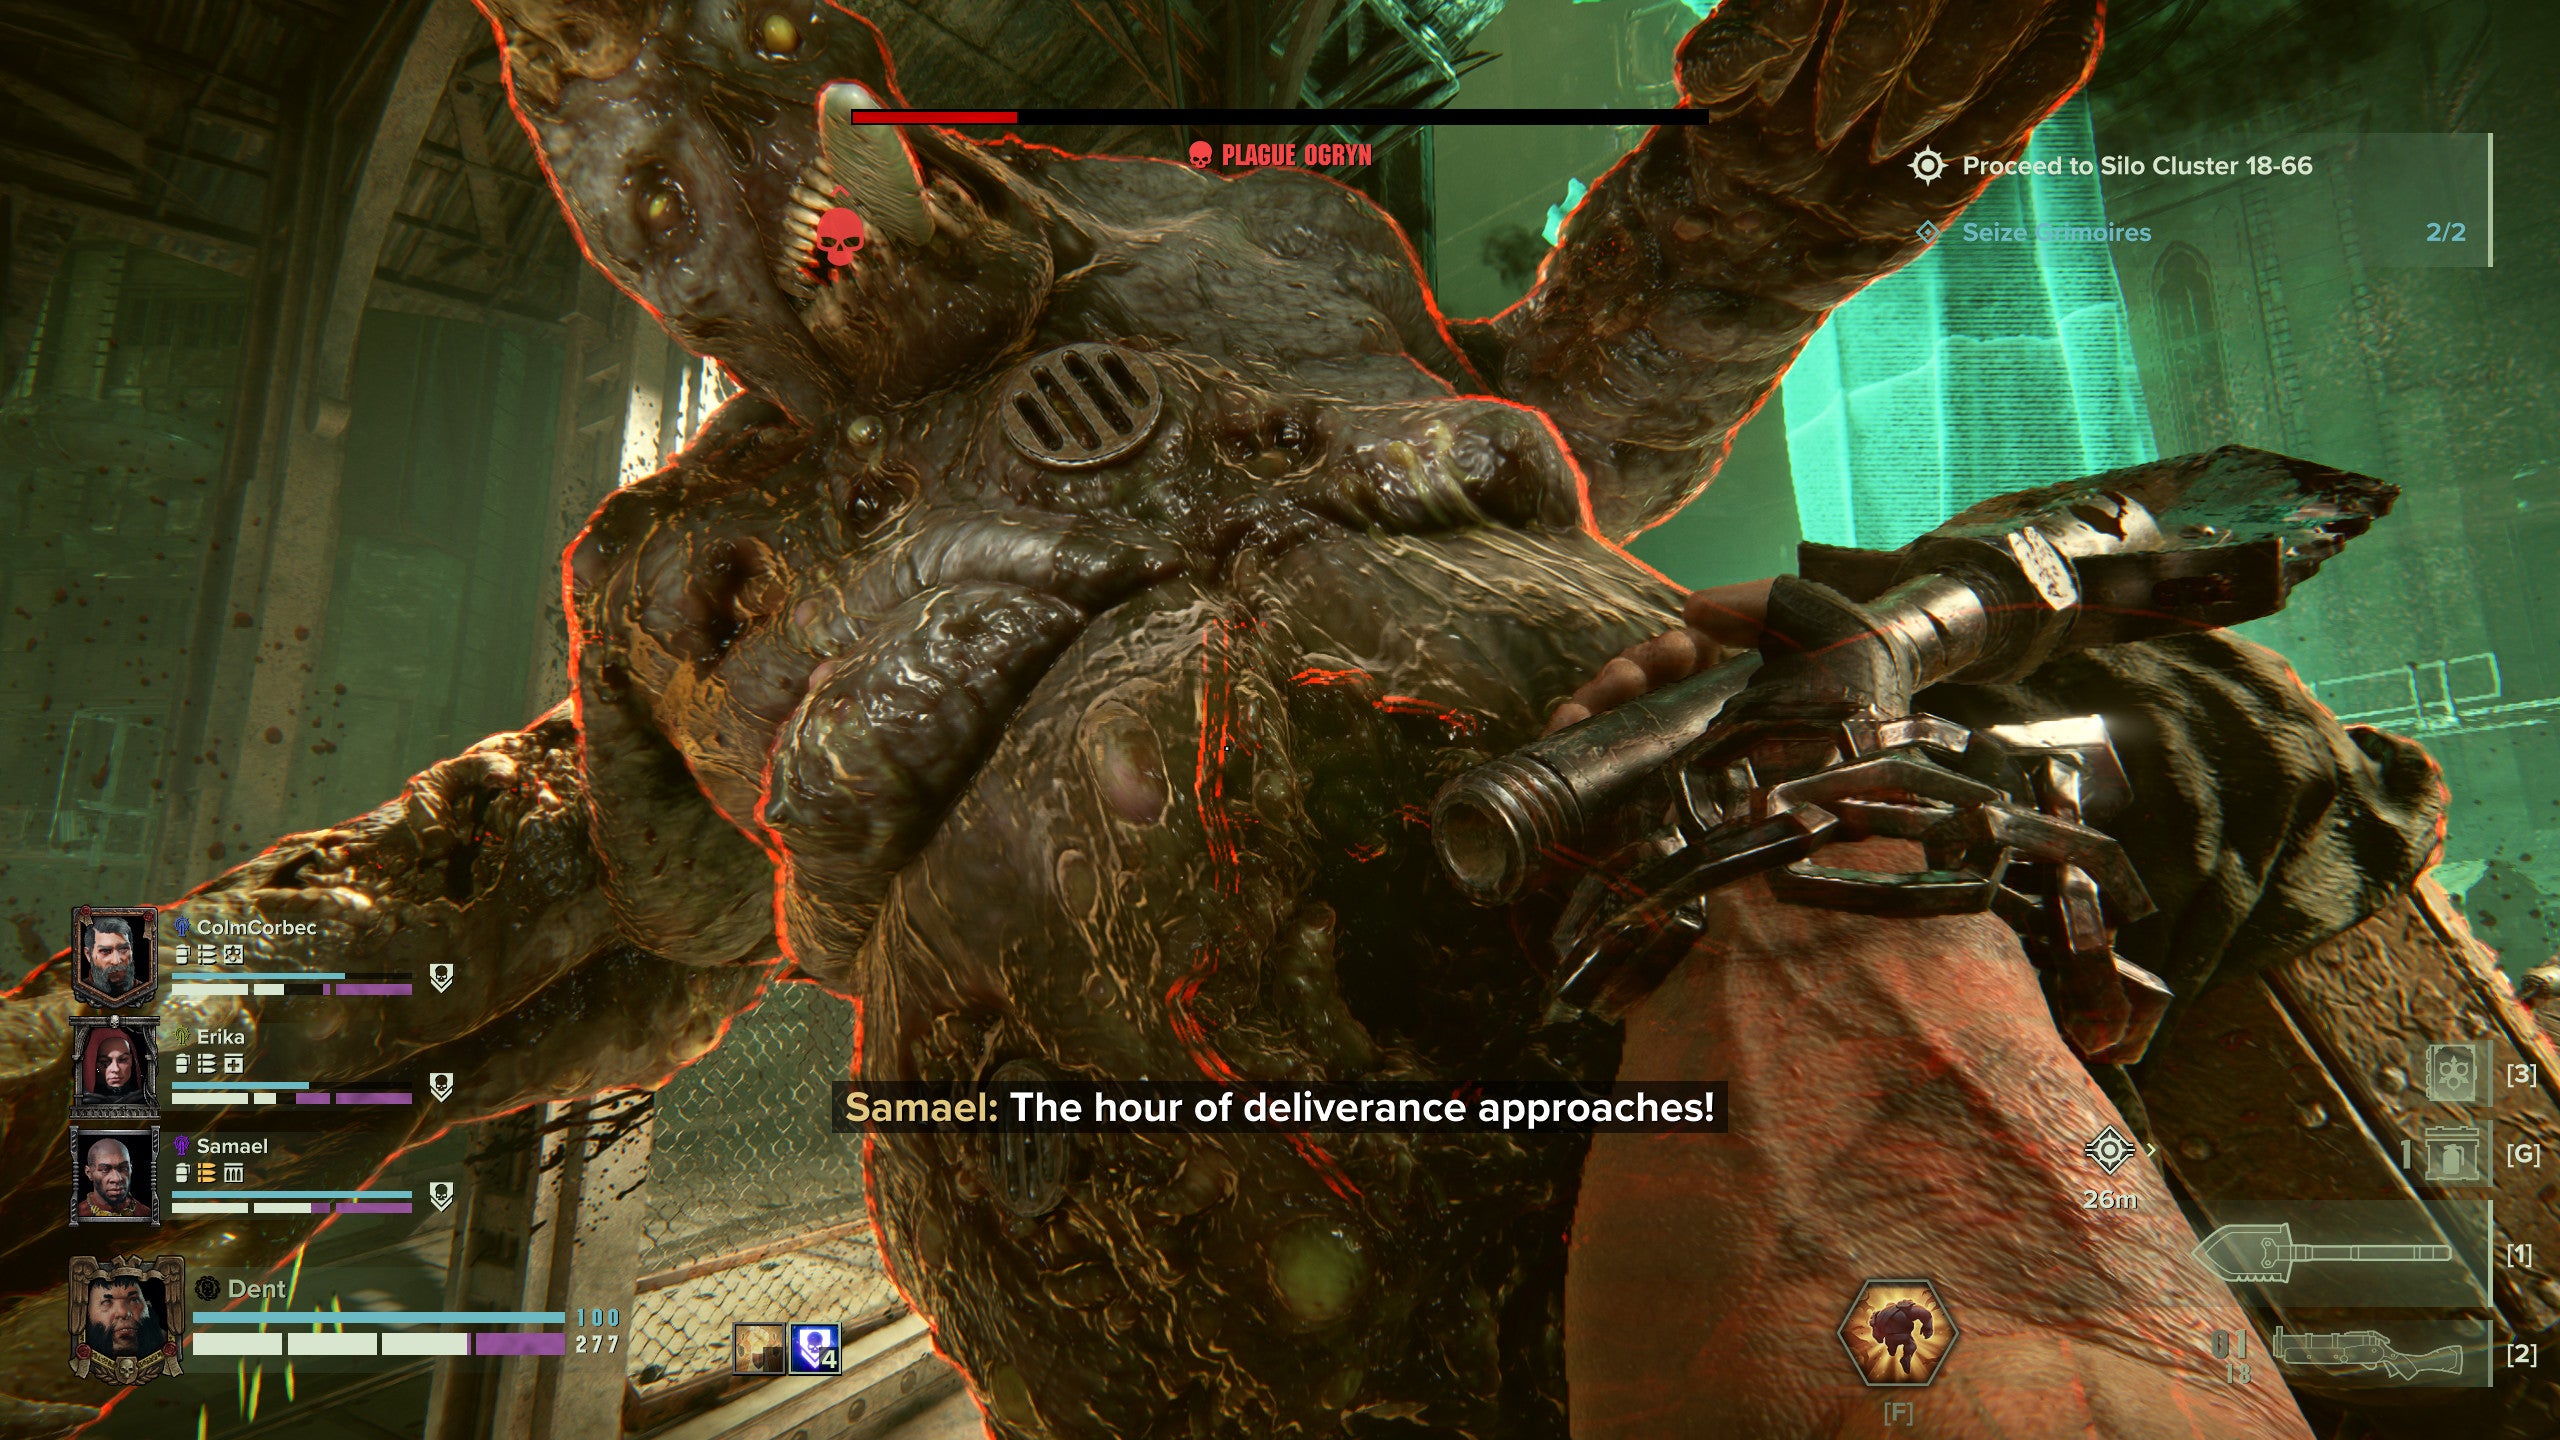 Cutting into a Plague Ogryn miniboss in a Warhammer 40,000: Darktide screenshot.